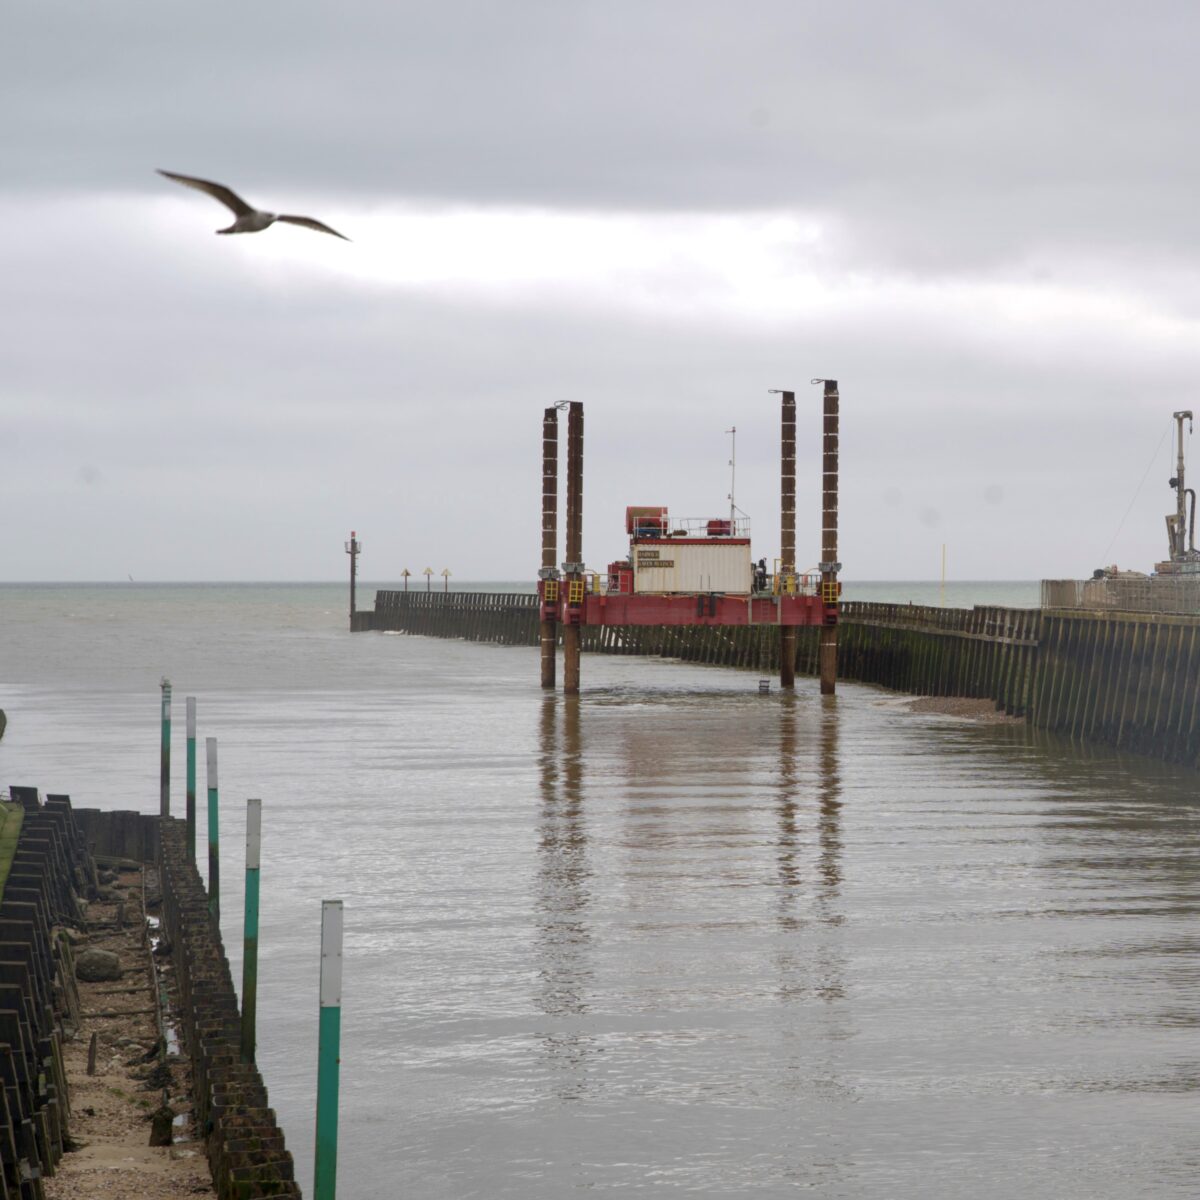 Haven Seajack 4 Completes Site Investigation Campaign at Littlehampton Harbour